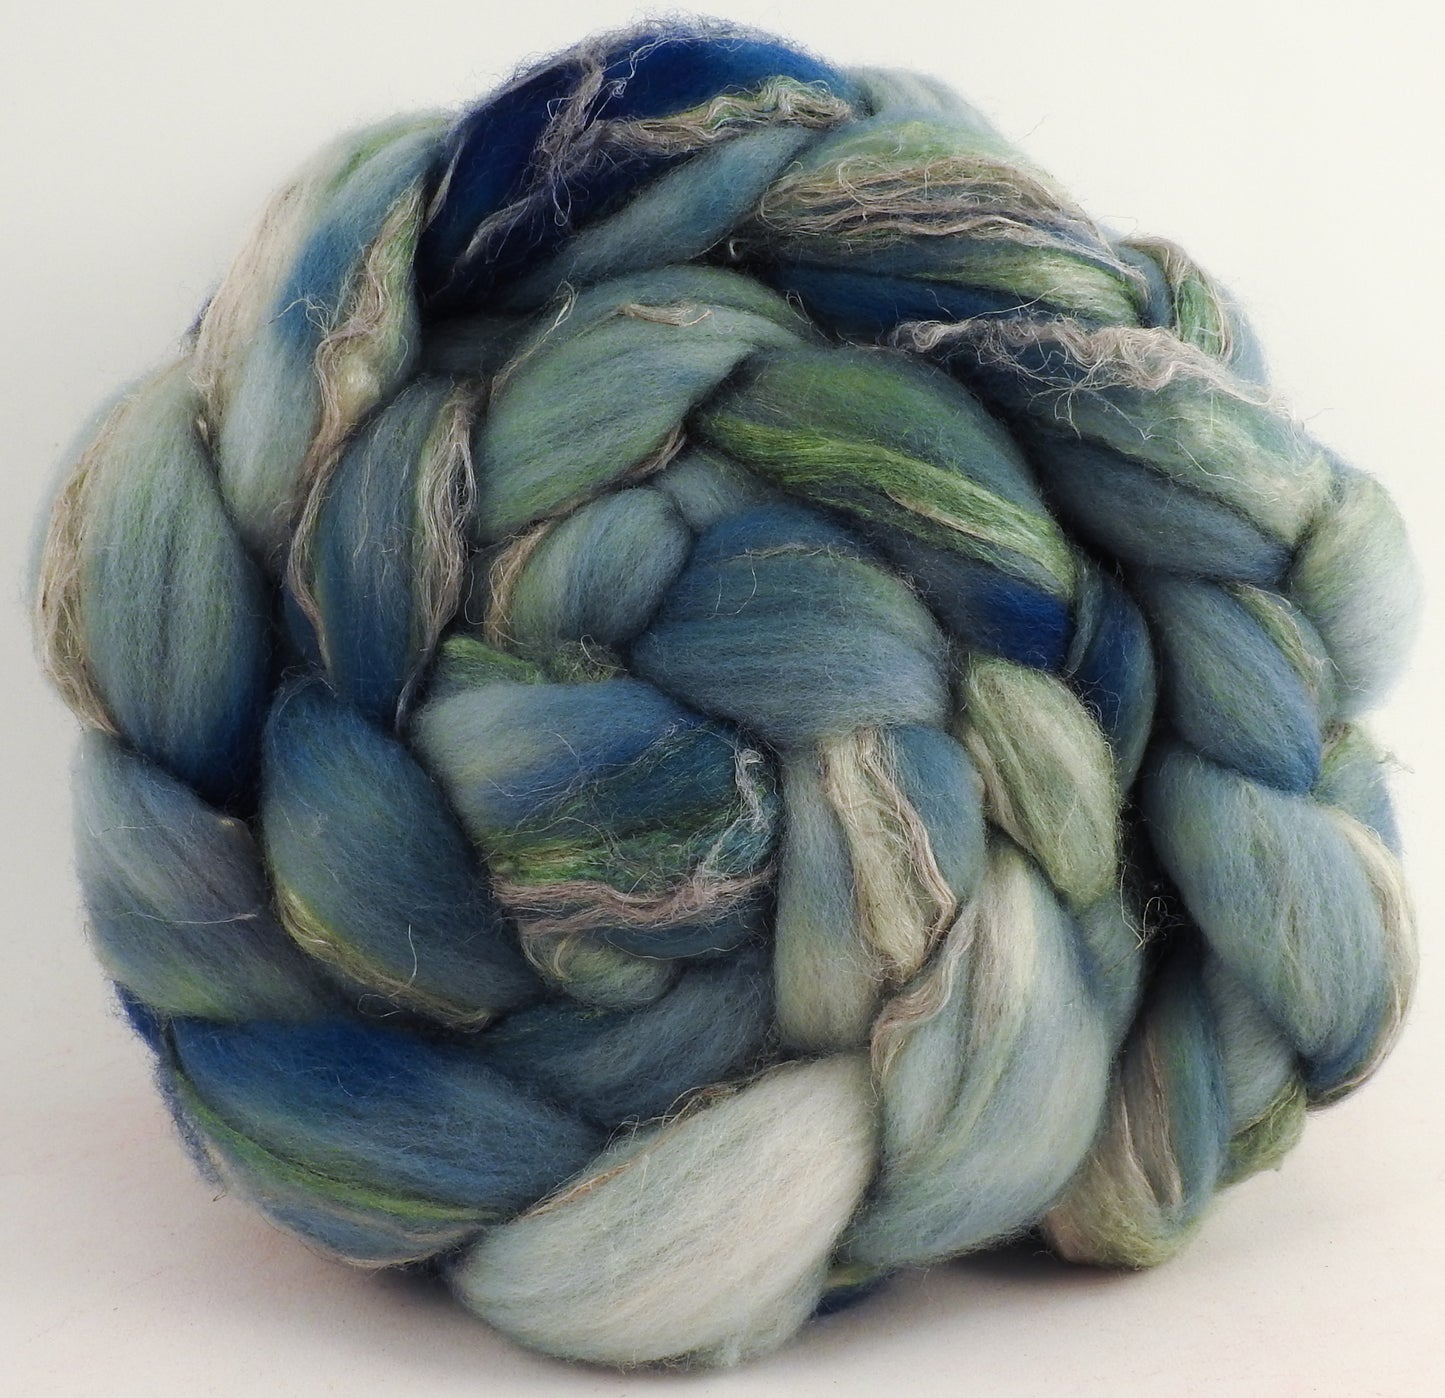 Willow ( broken) - Merino/Tussah Silk/ Natural Flax (50/25/25)- 5.6 oz.